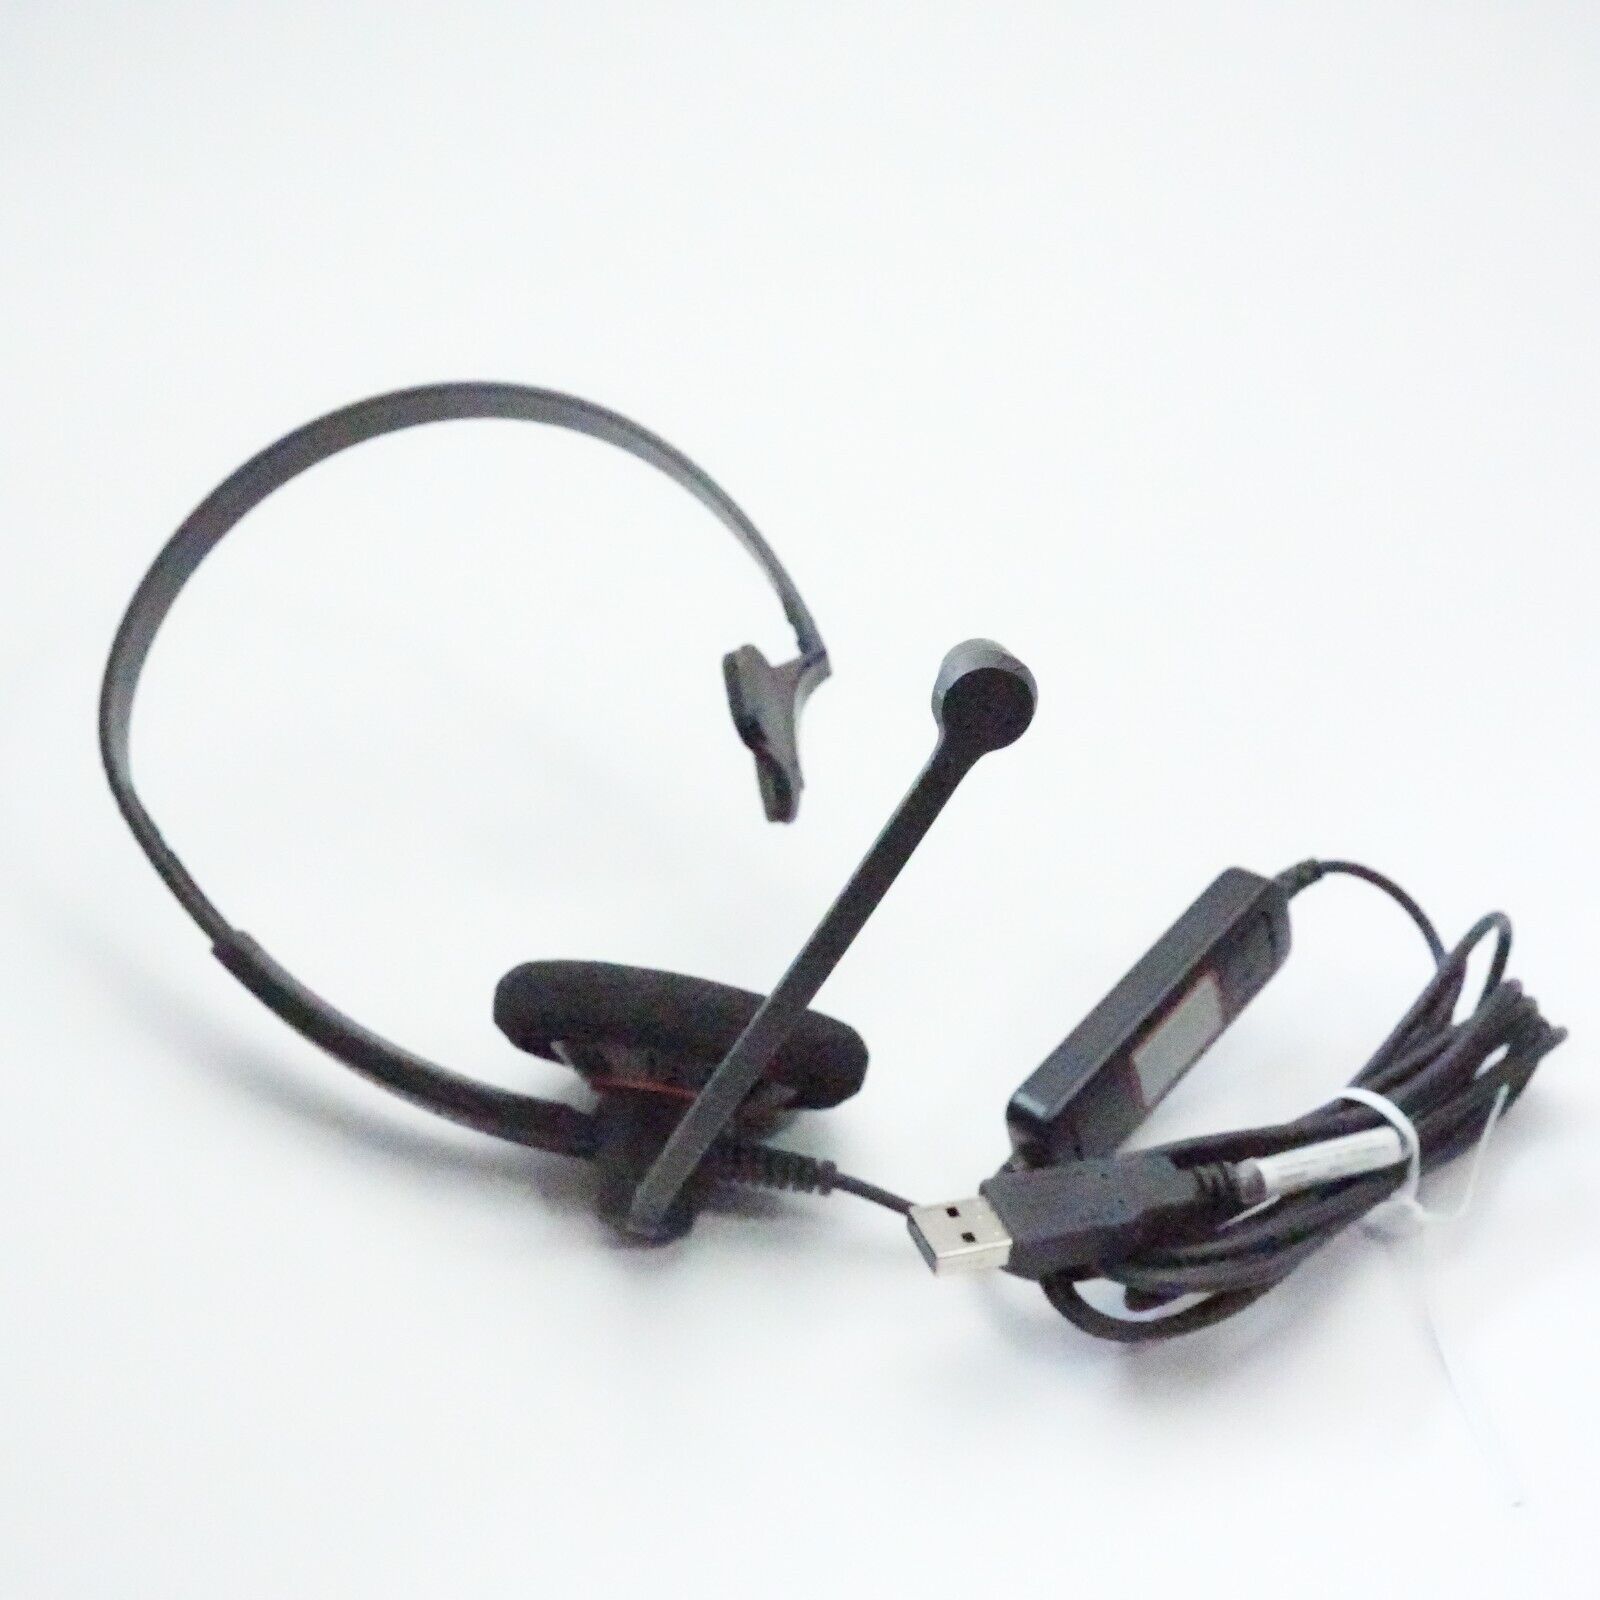 Sennheiser SC 60 USB ML - USB Headset With Microphone